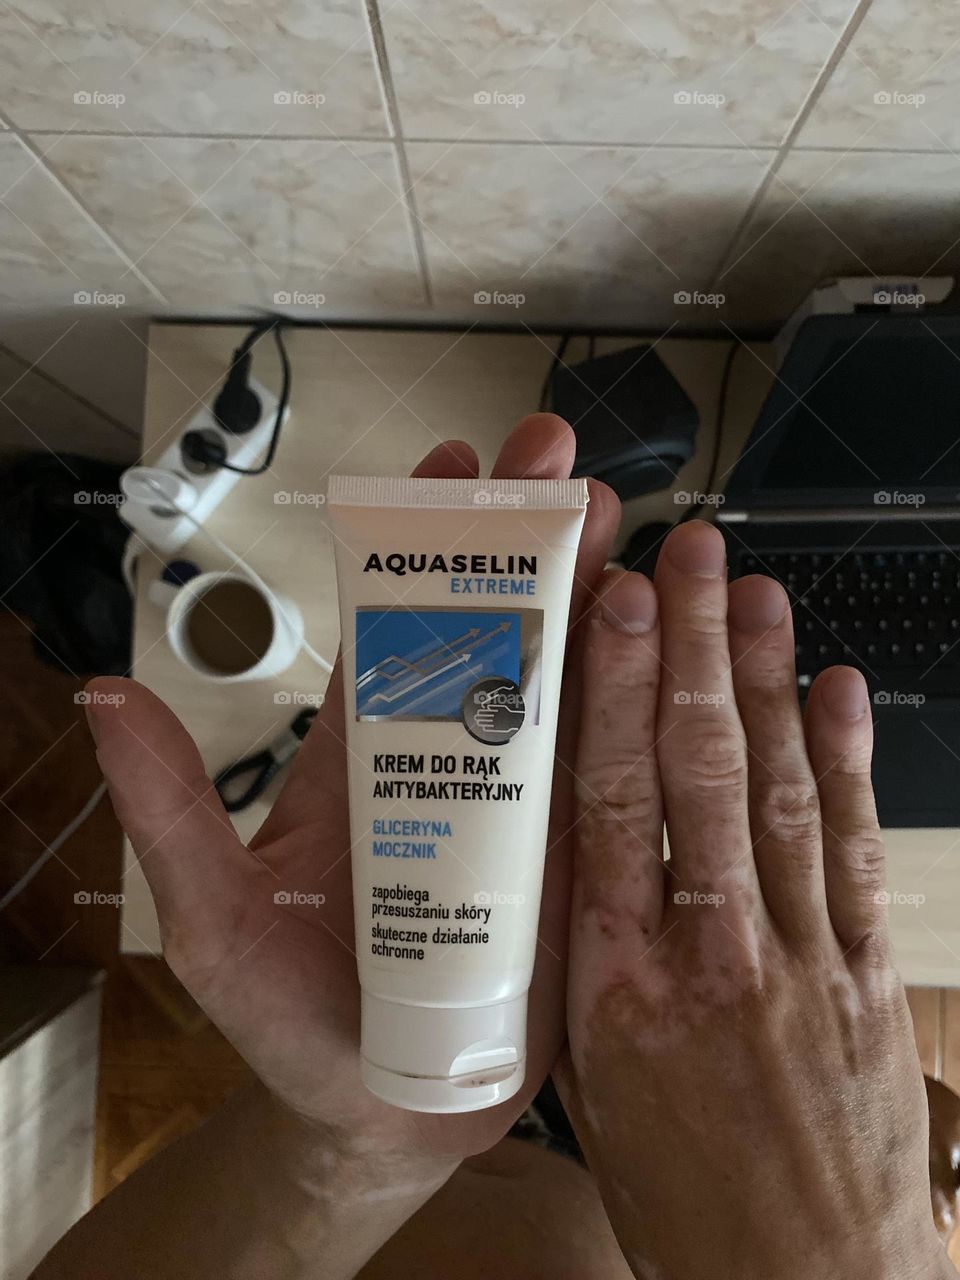 My favorite hands cream